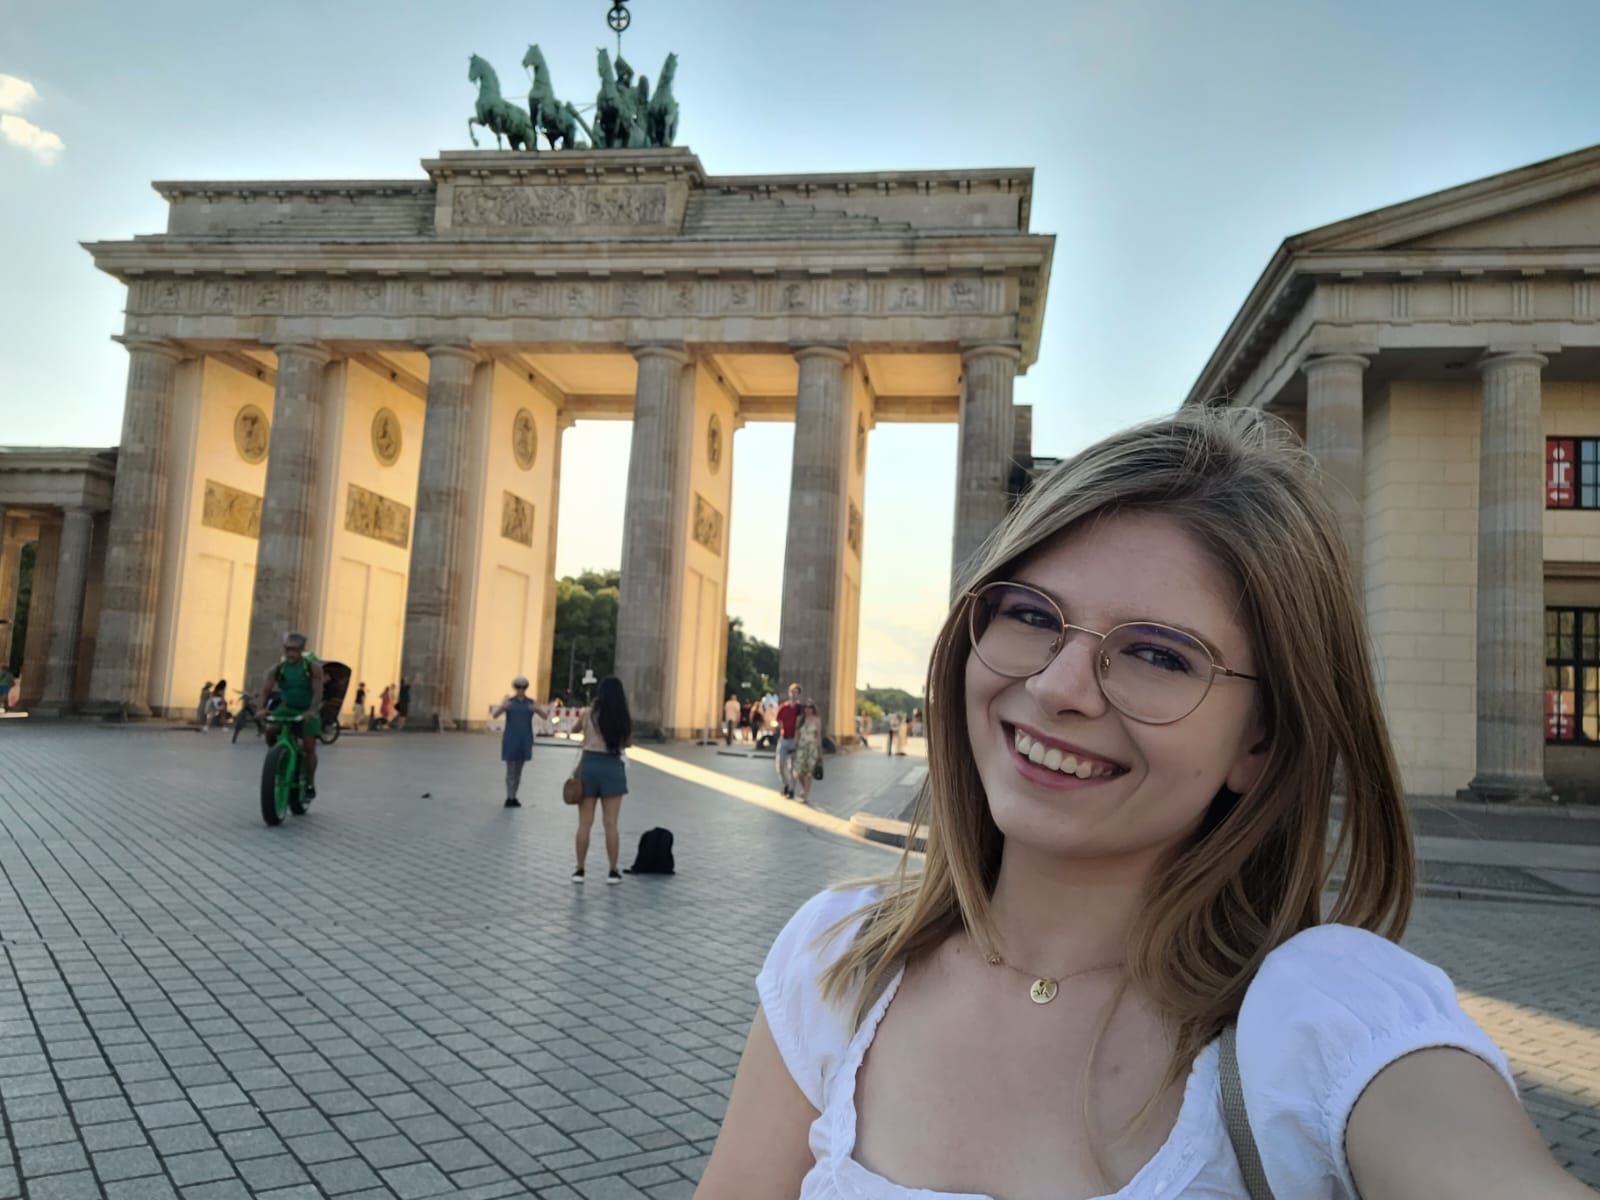 Oliwia in front of the Brandenburg gate, berlin